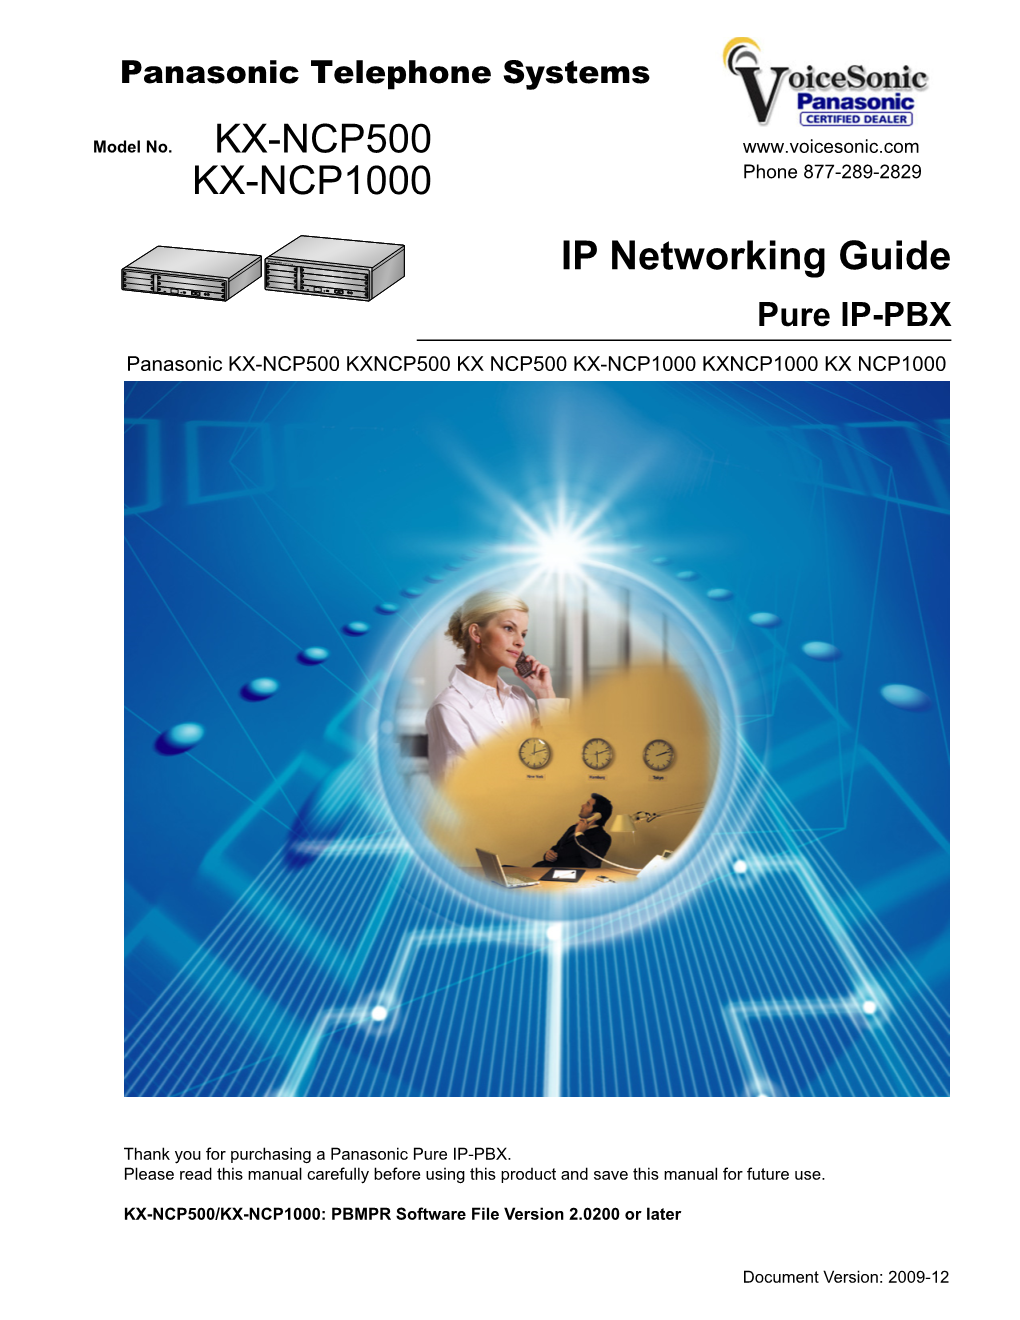 Panasonic KX-NCP500 KX-NCP1000 IP Networking Guide Pure IP-PBX